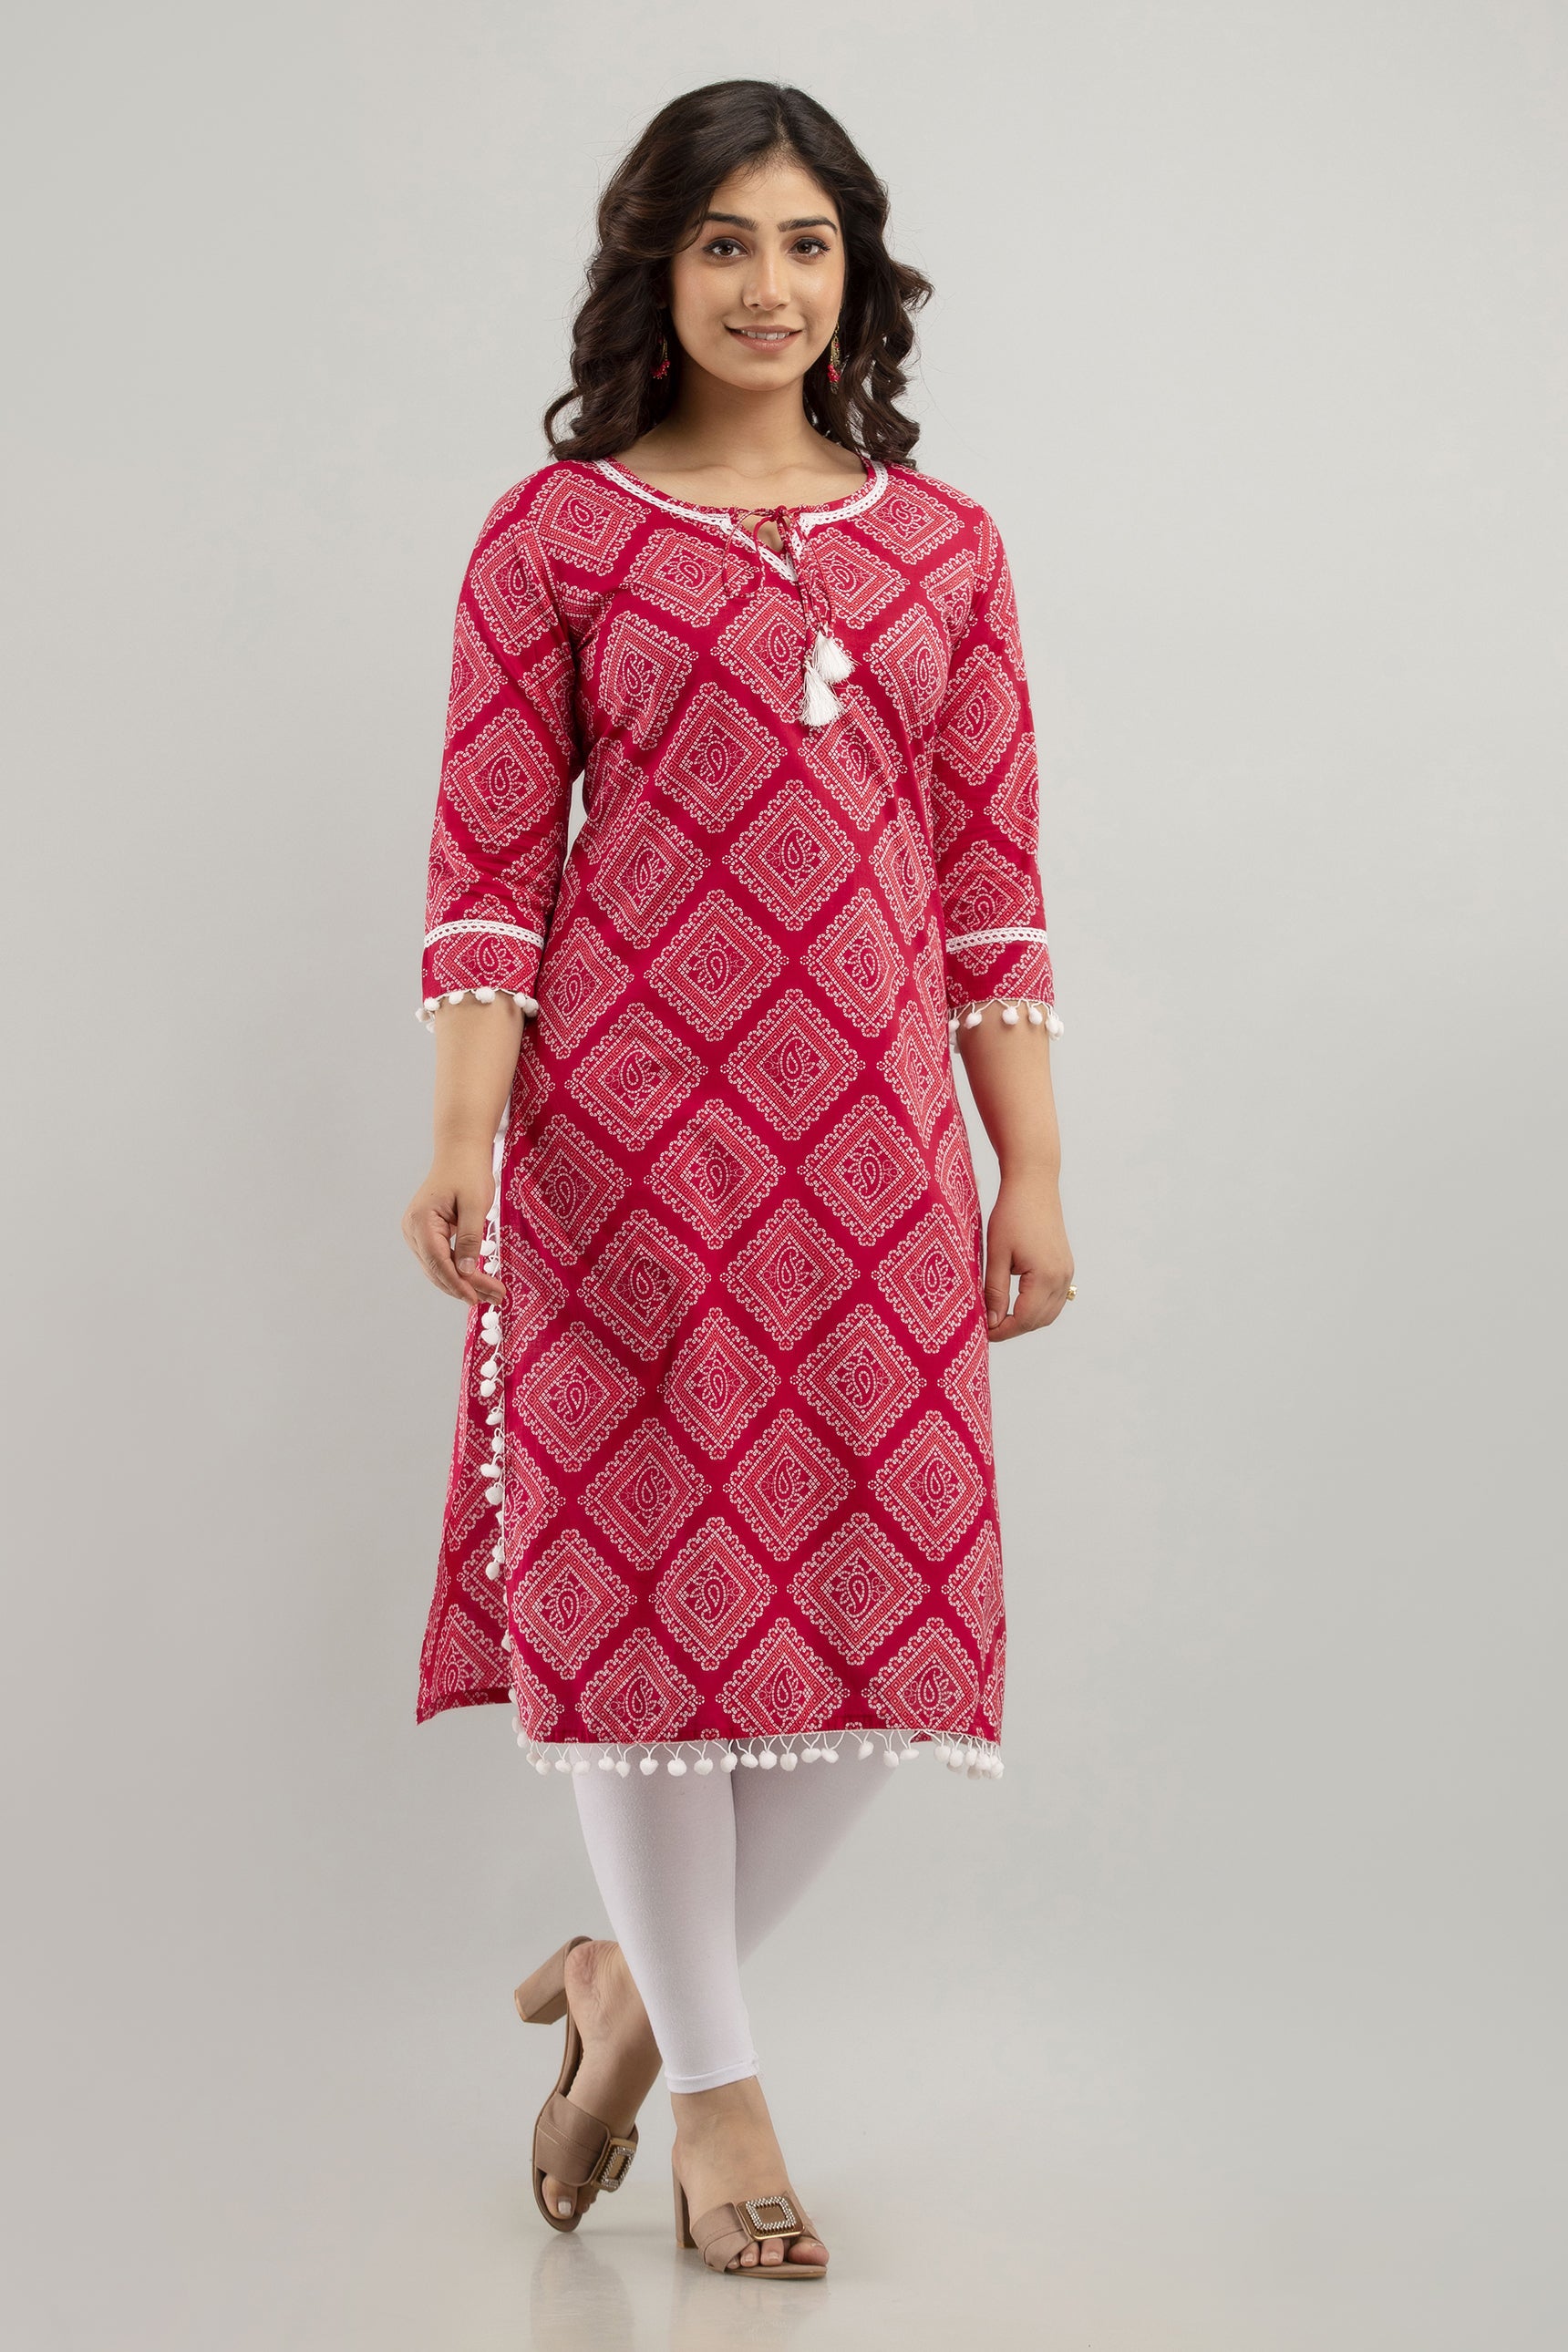 Women's Embroidered Pure Cotton Regular Kurta (Pink) - Charu